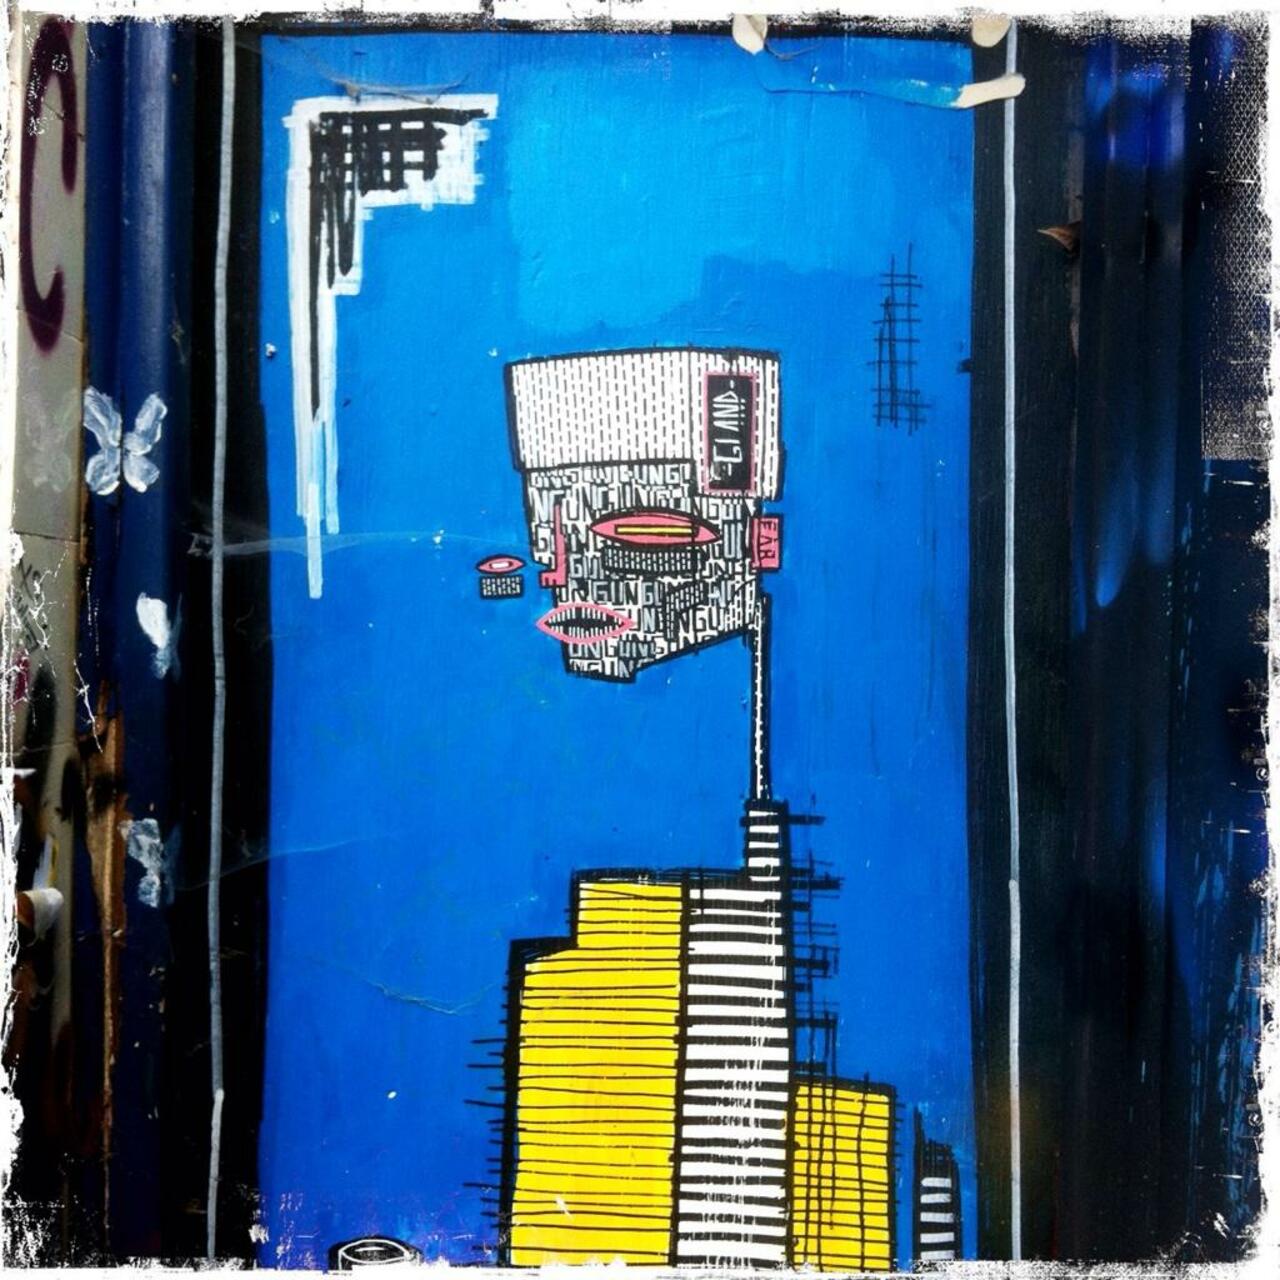 Snapped this before - #Alo piece in the car park off Brick Lane #art #streetart #graffiti http://t.co/qvFDm5evh0